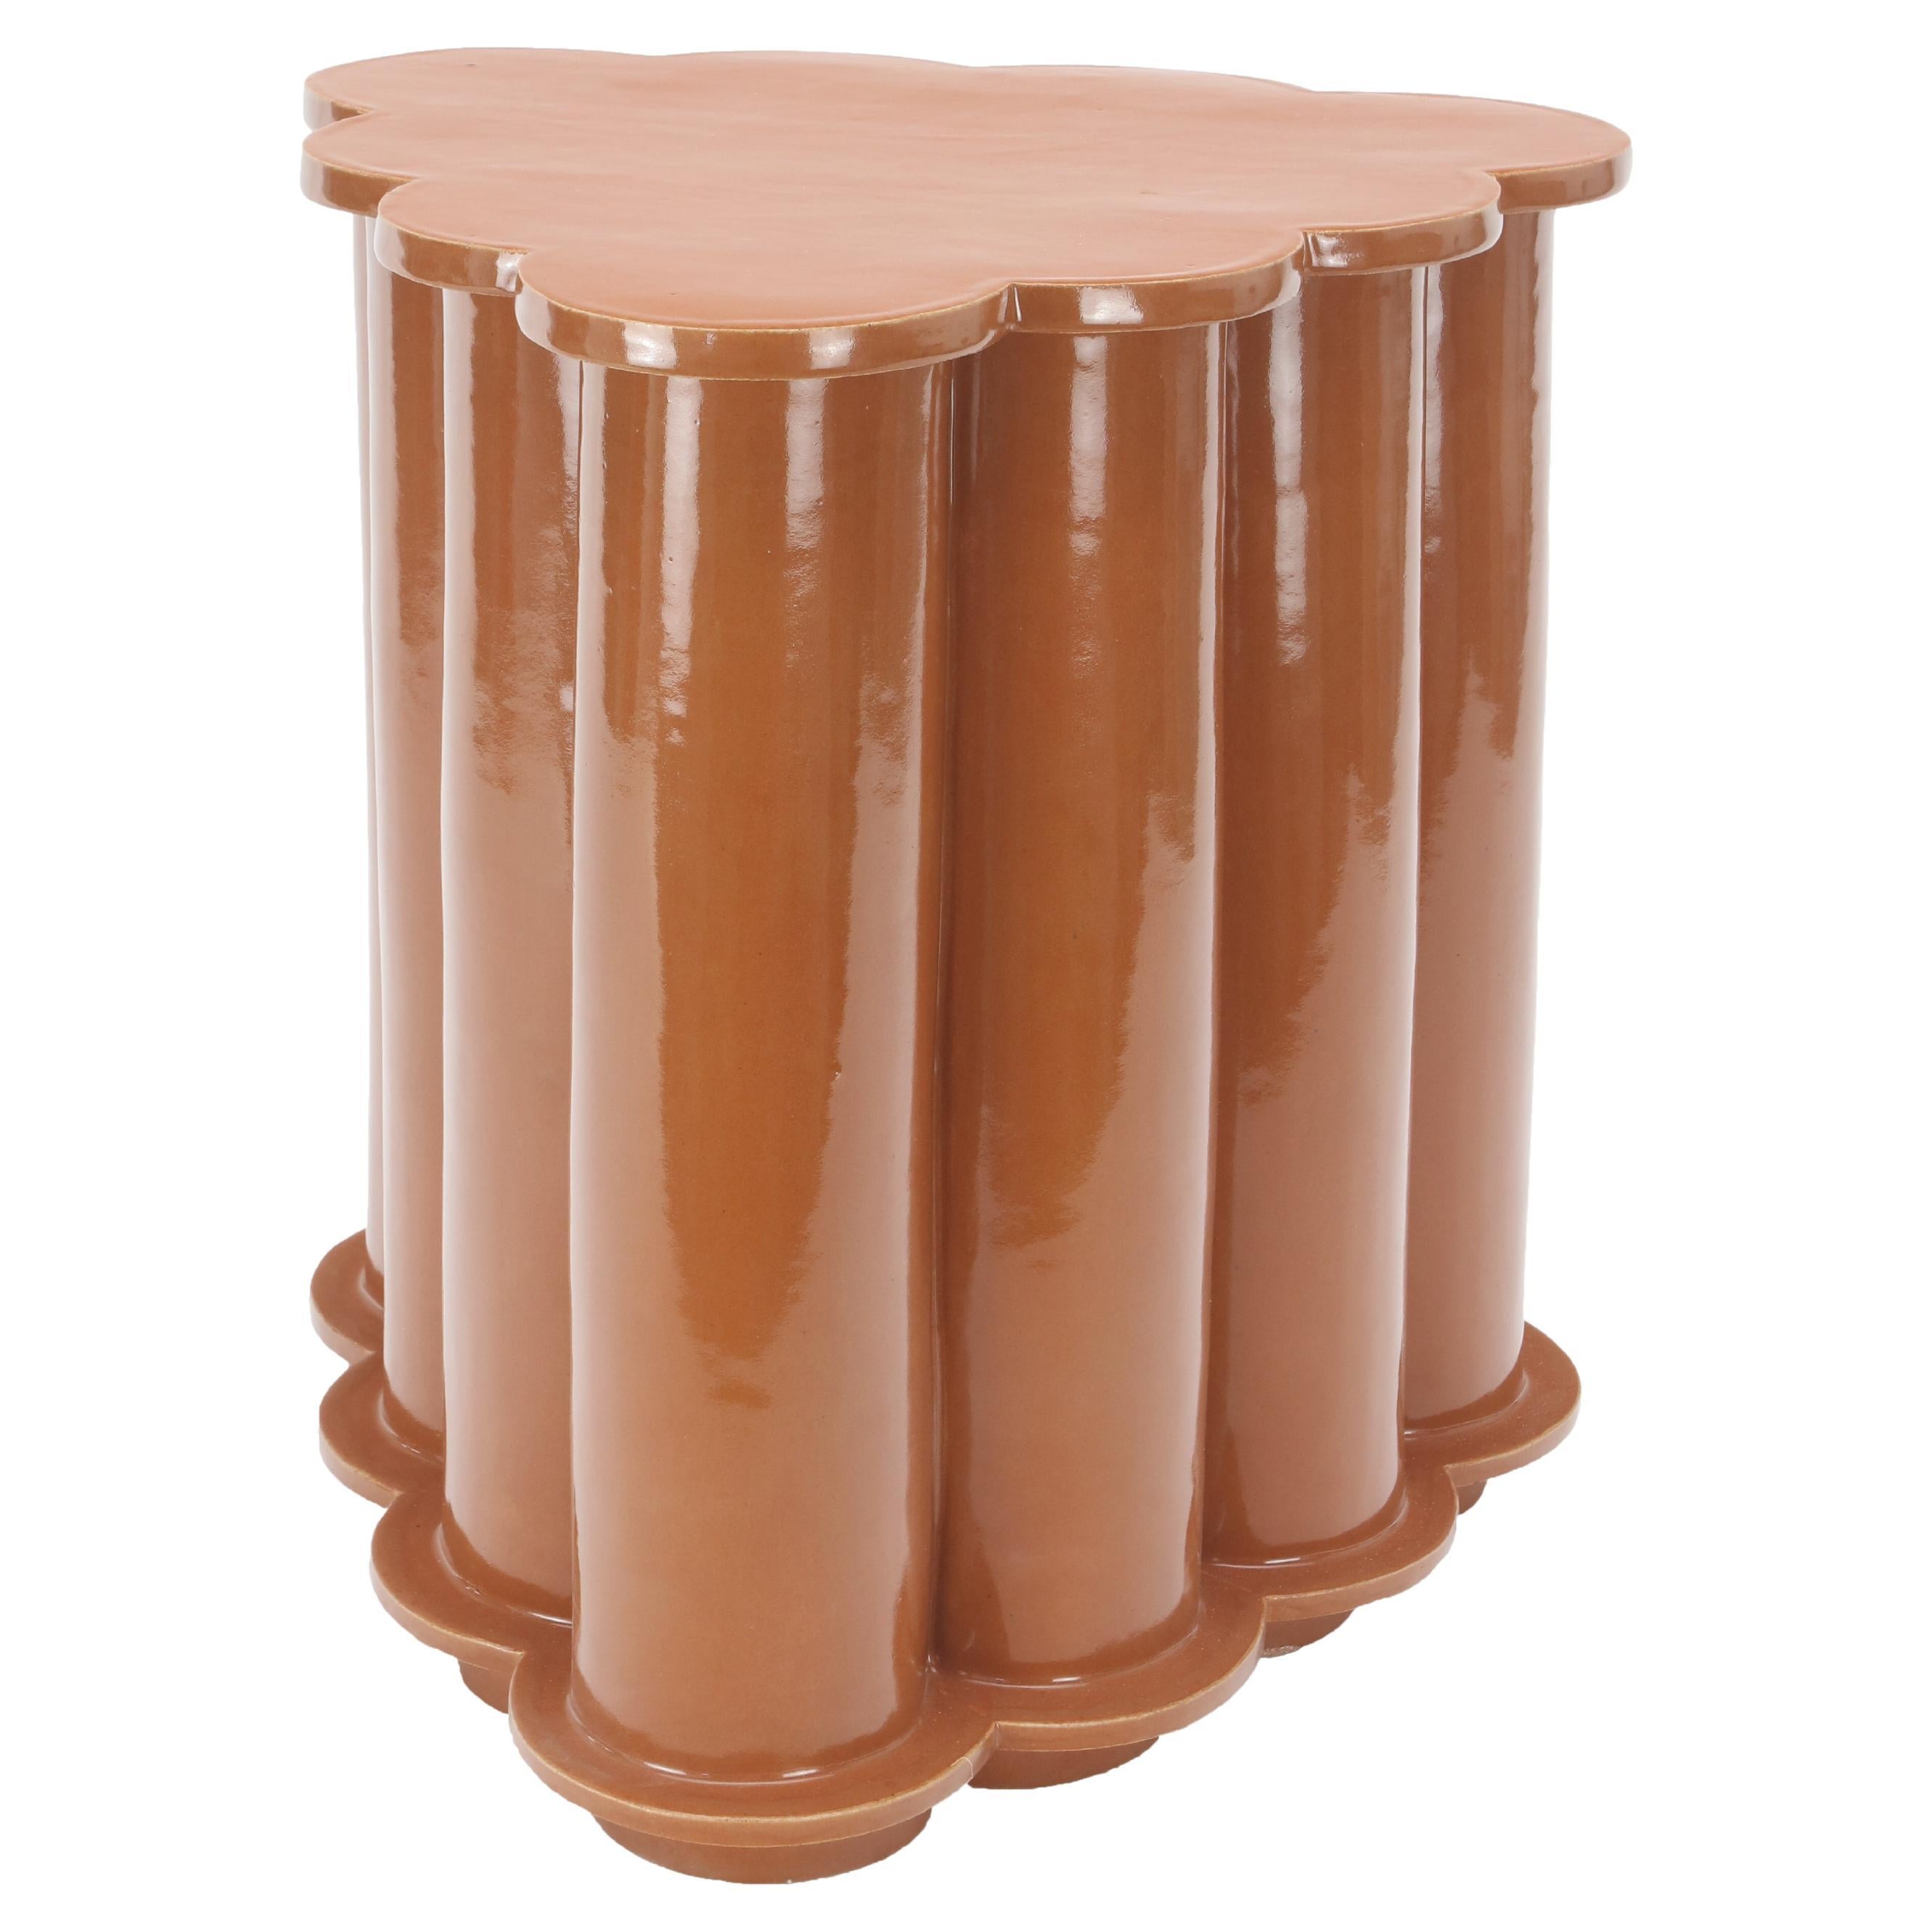 Single Tier Ruffle Ceramic Side Table & Stool in Cinnamon by Bzippy For Sale